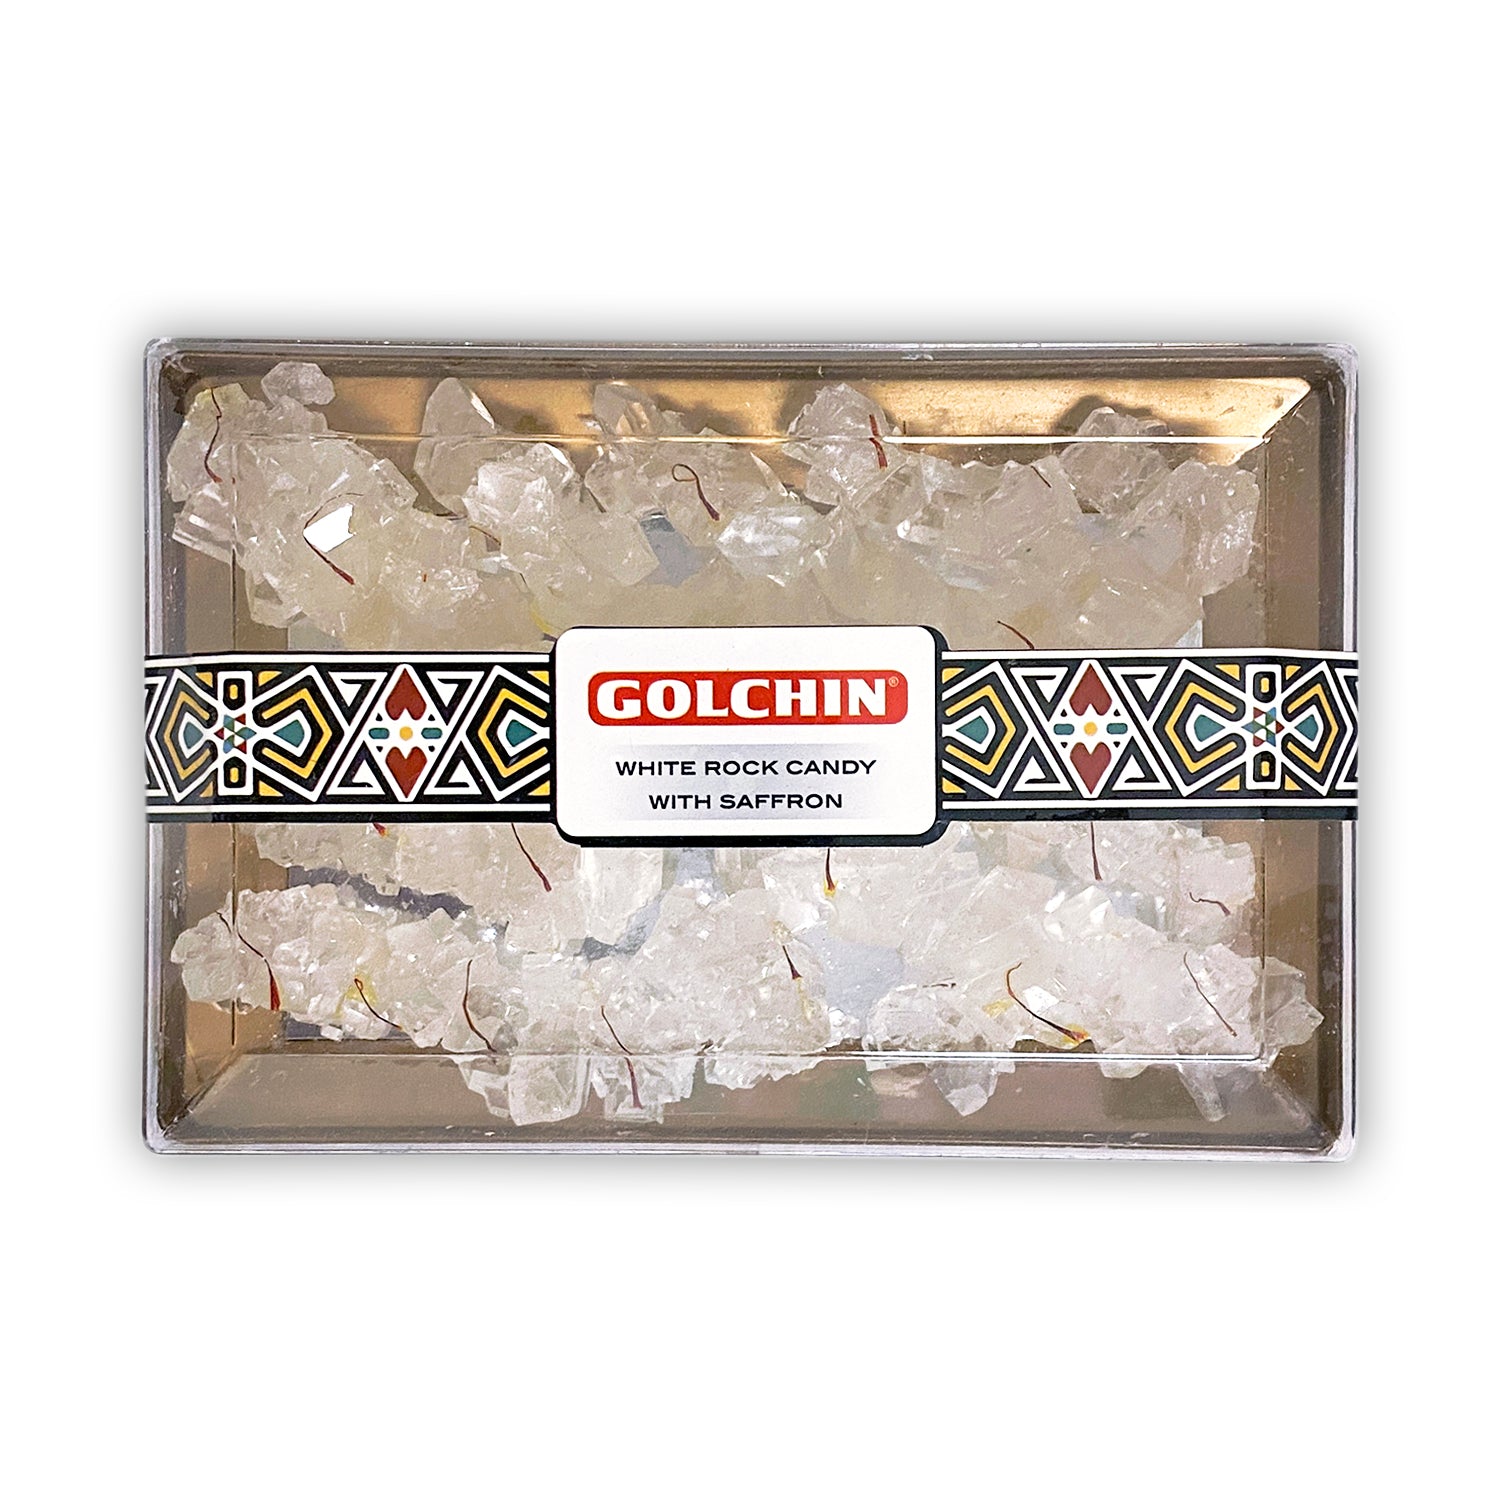 GOLCHIN WHITE ROCK CANDY/WITH SAFFRON IN BOX